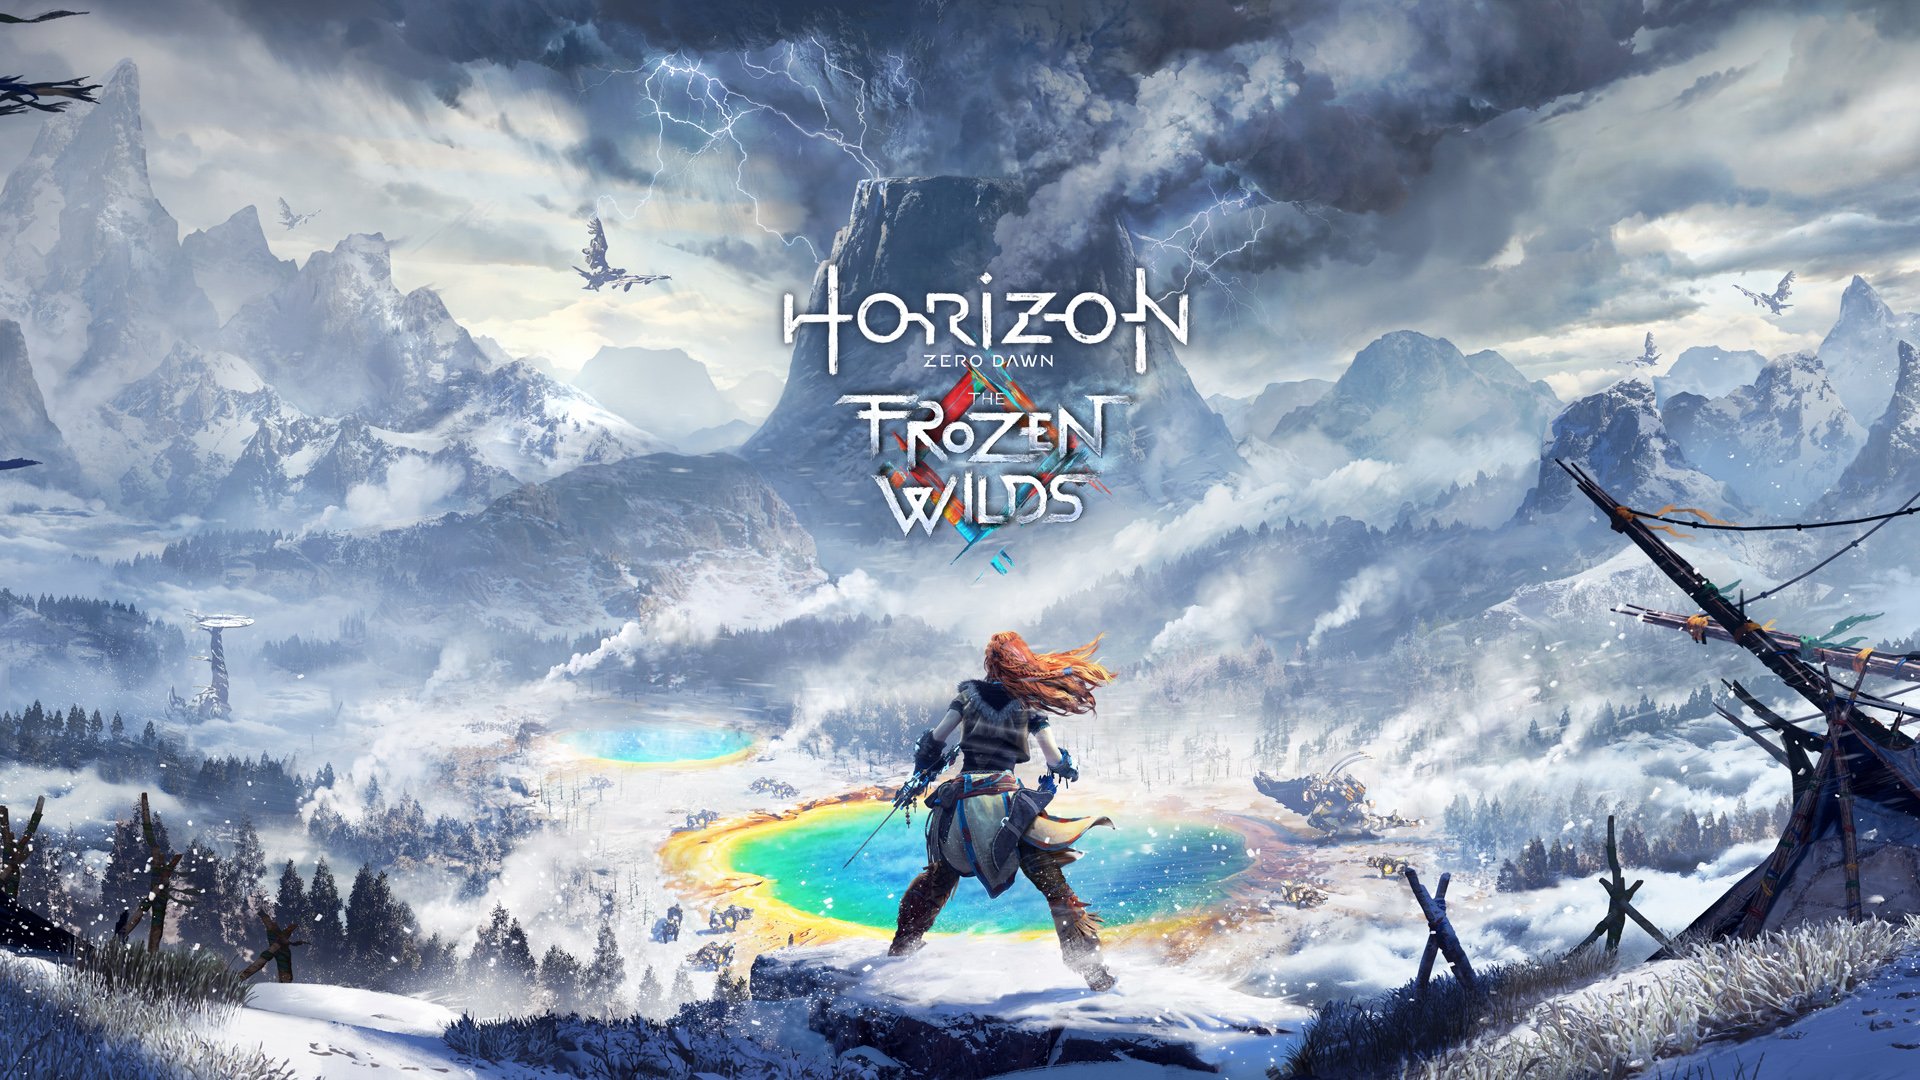 Visão geral do suplemento The Frozen Wilds para o jogo Horizon Zero Dawn